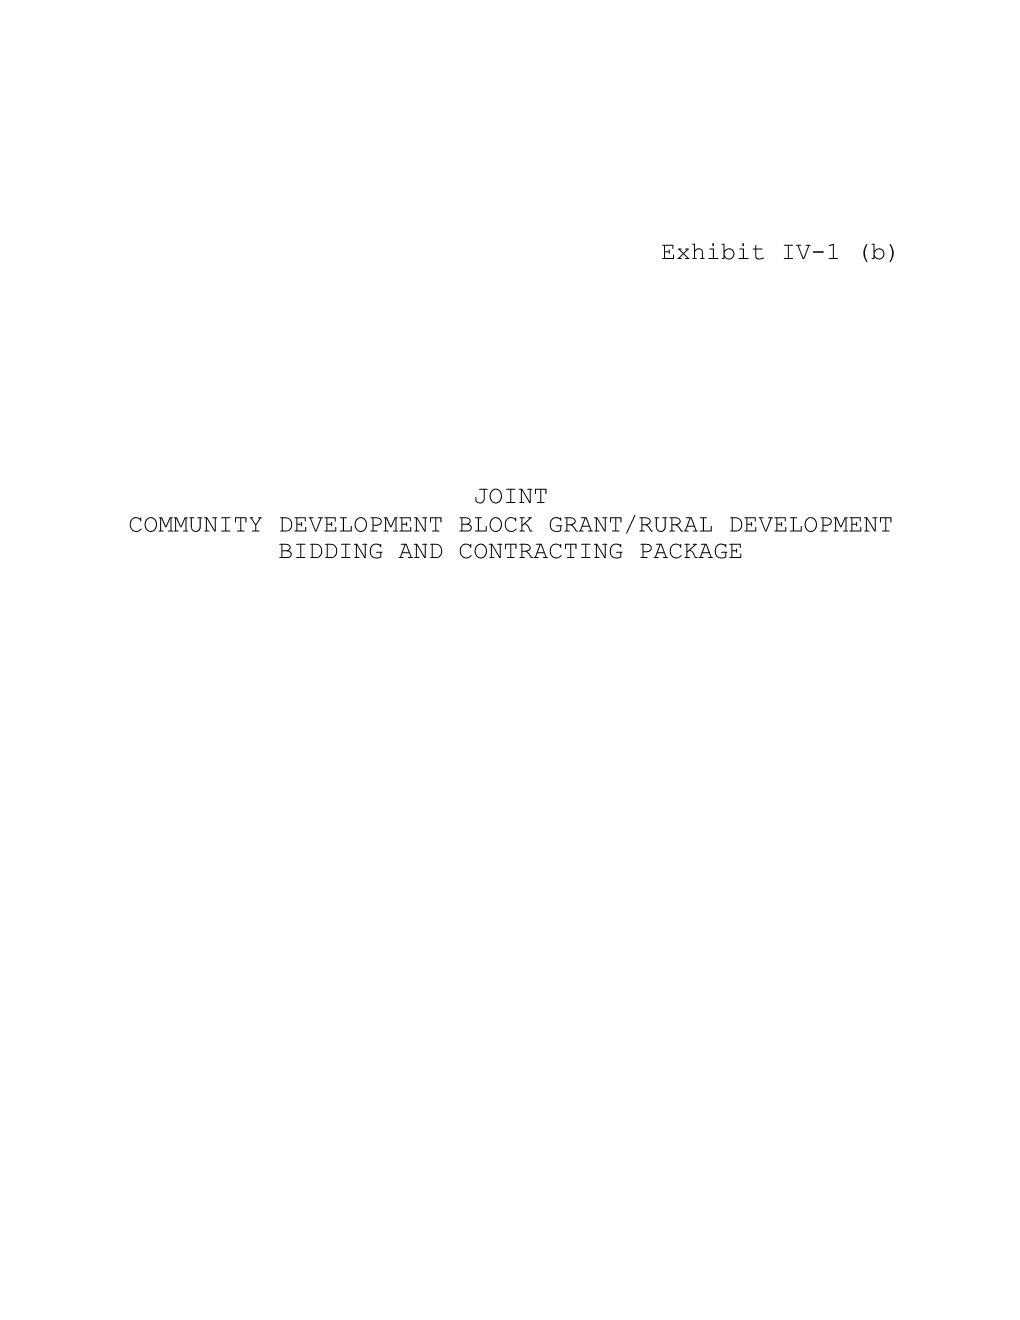 Community Development Block Grant/Rural Development Bidding and Contracting Package